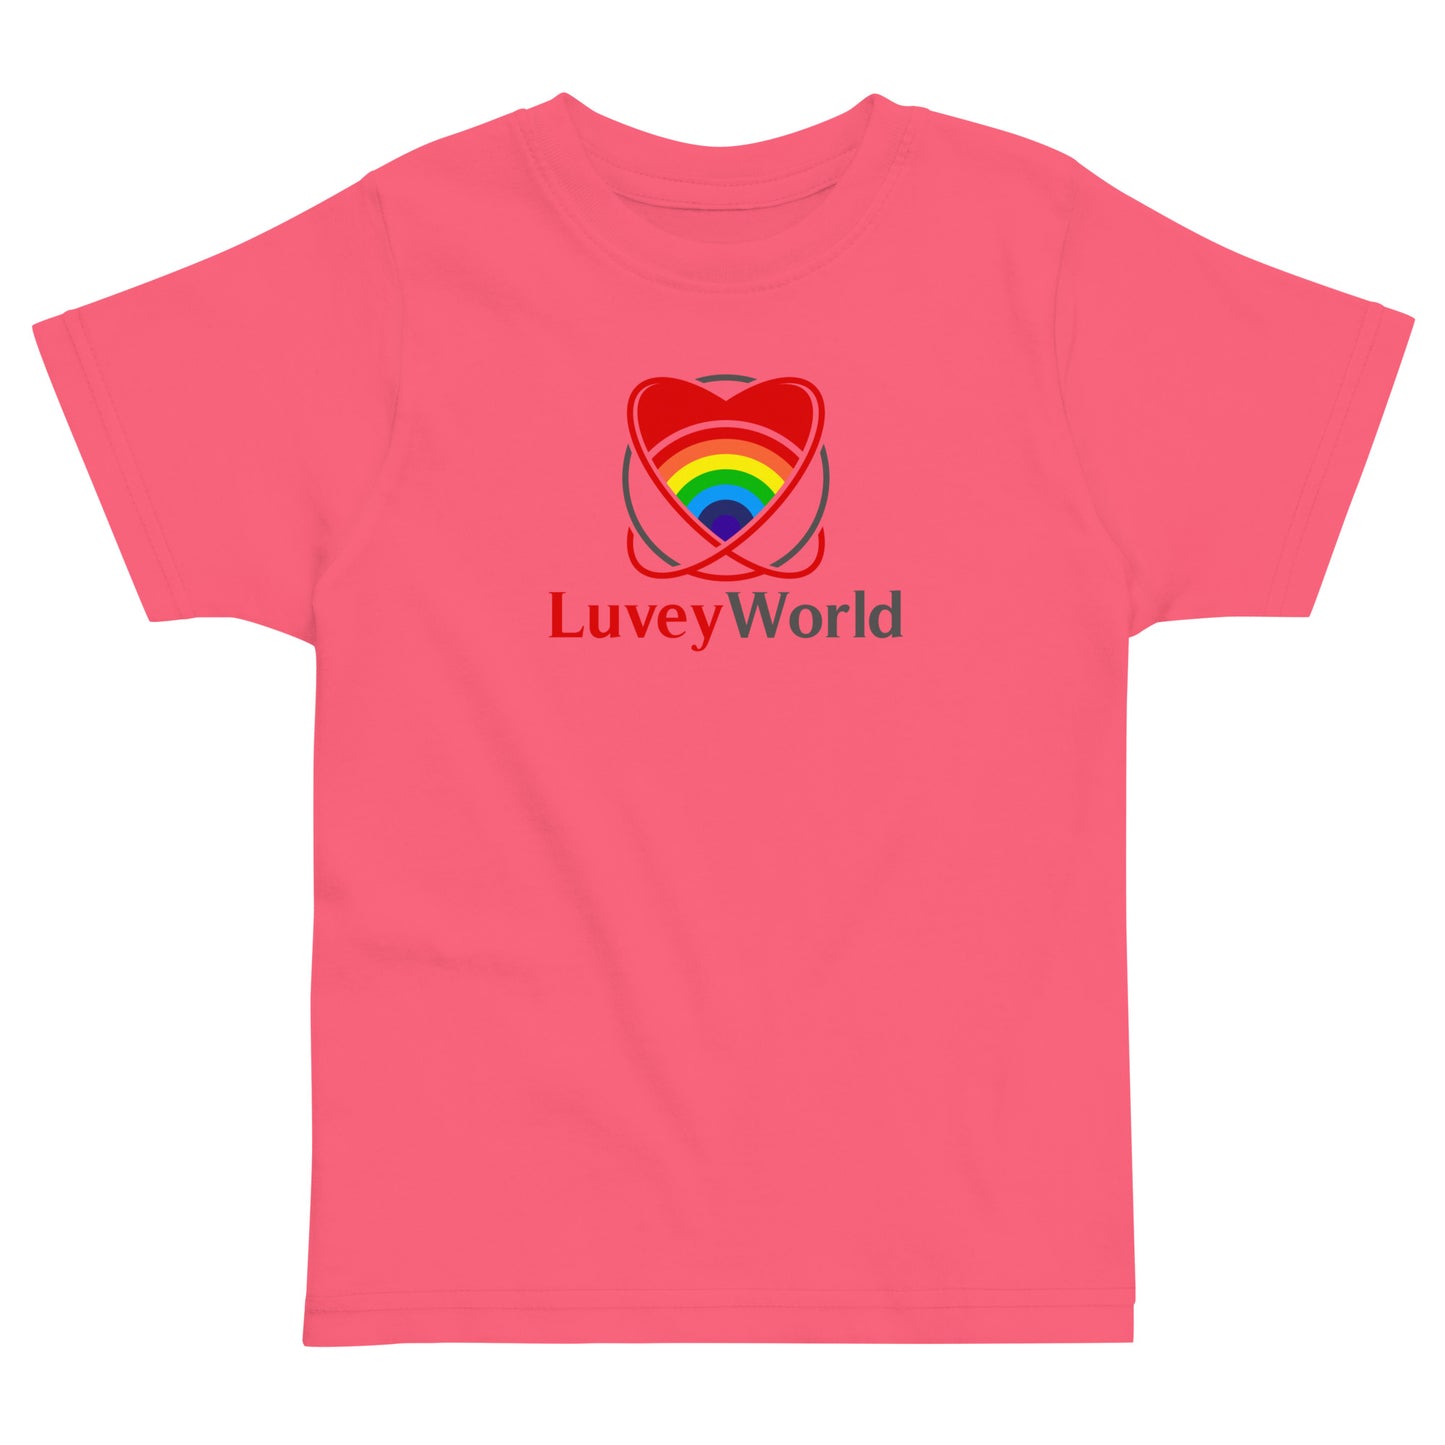 LuveyWorld Toddler jersey t-shirt